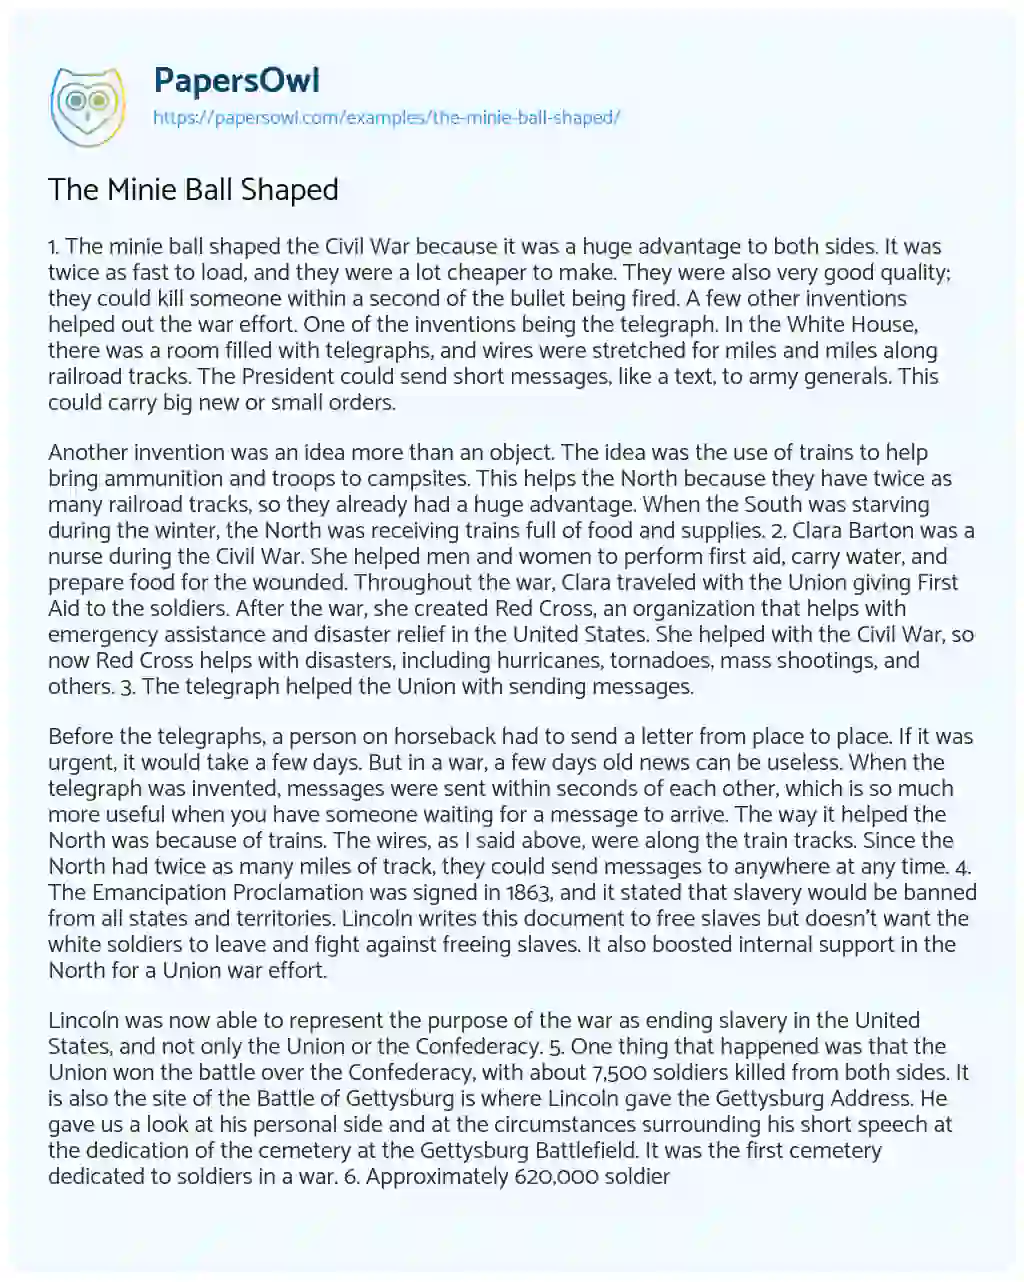 Essay on The Minie Ball Shaped